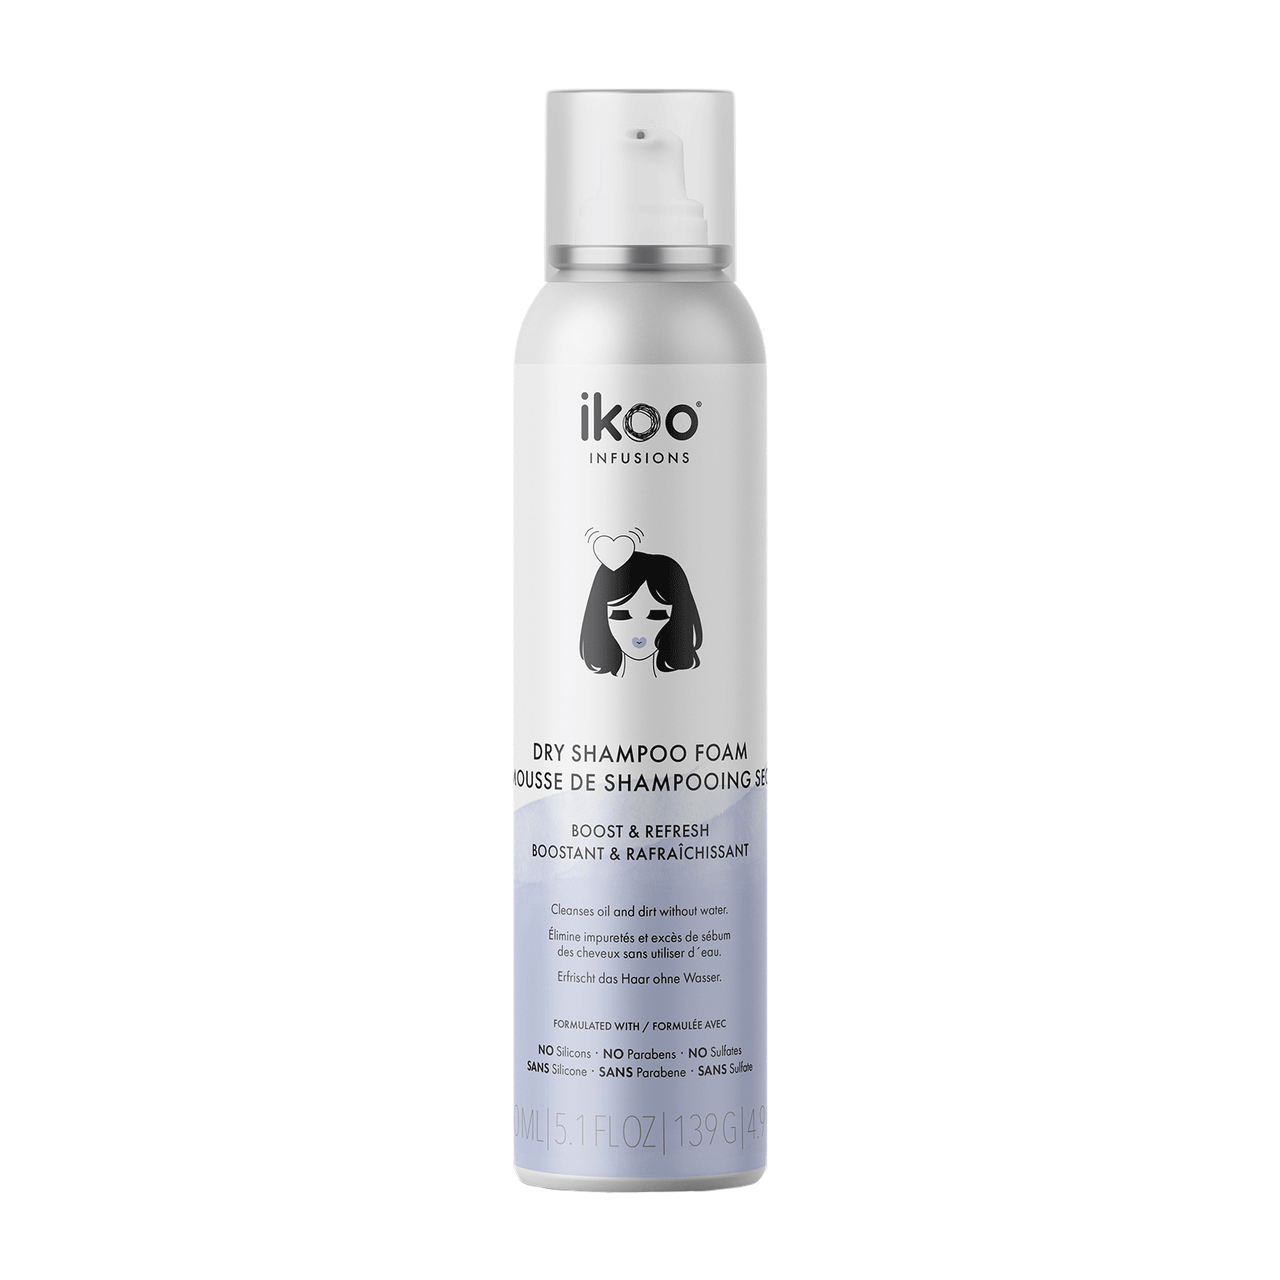 ikoo Dry Shampoo Foam Boost & Refresh 5.1 fl. oz.